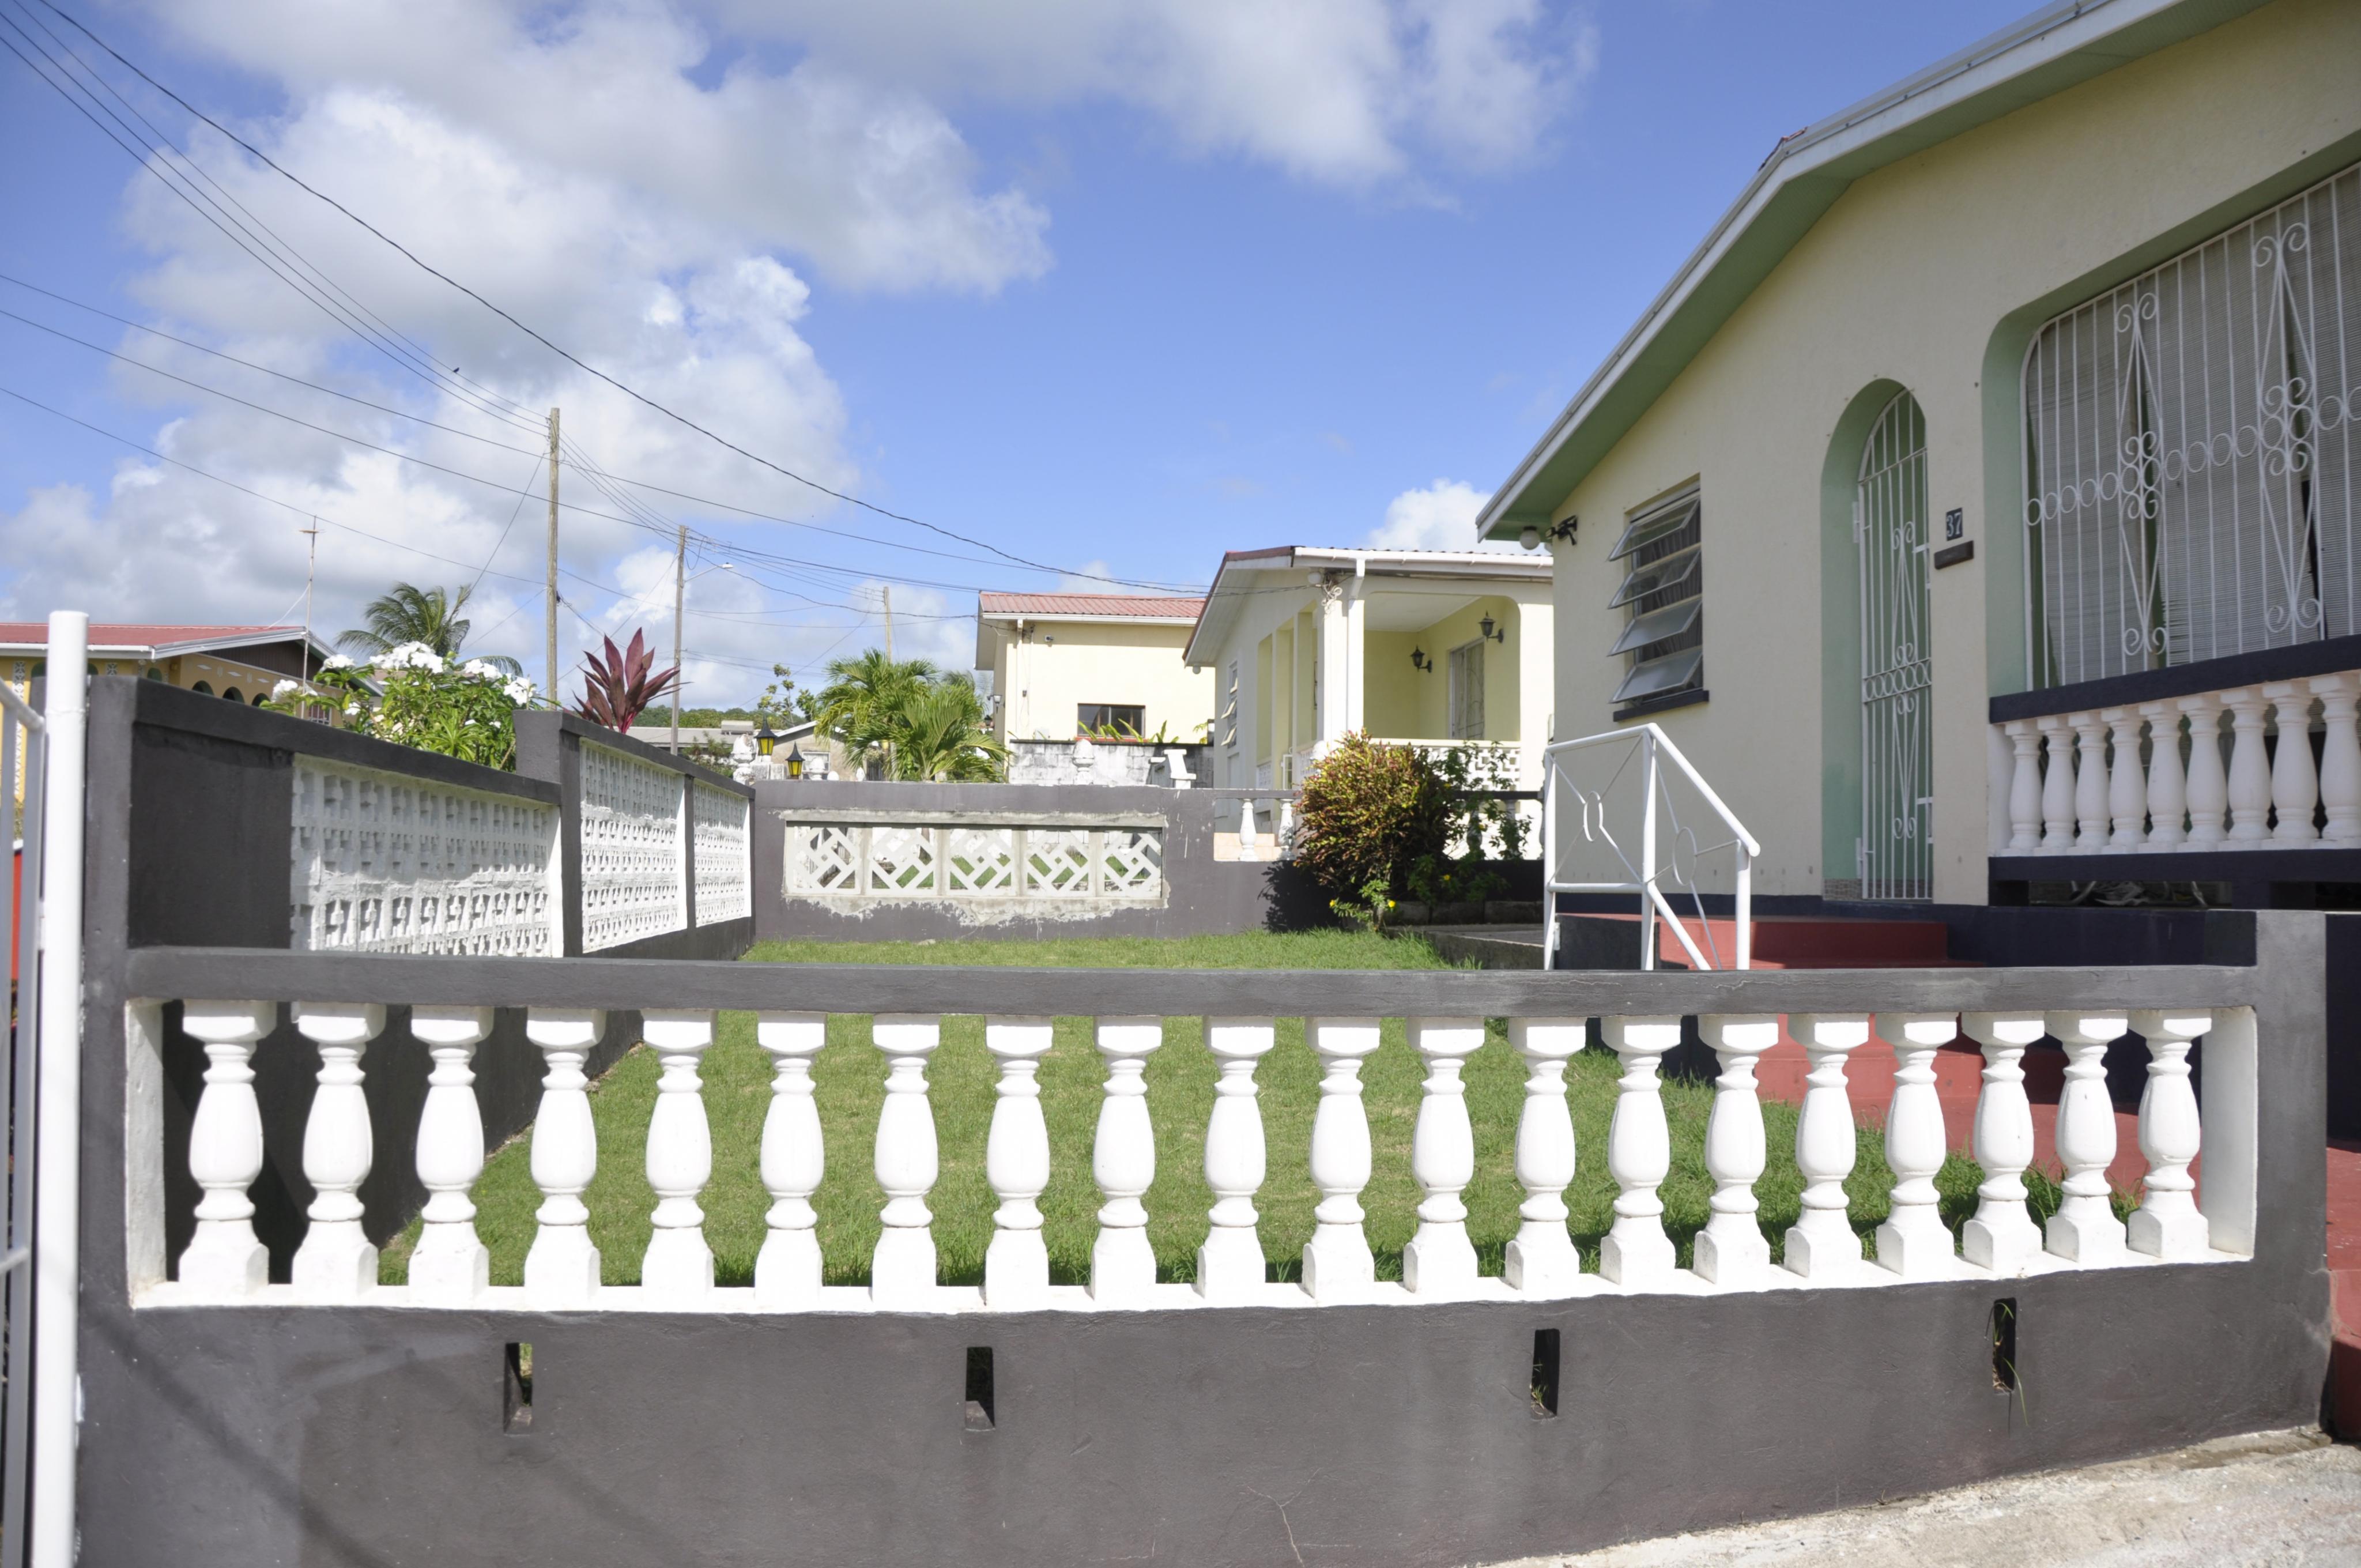 For Sale Halton Terrace 37 St Philip Barbados House Villa Barbados Property For Sale At